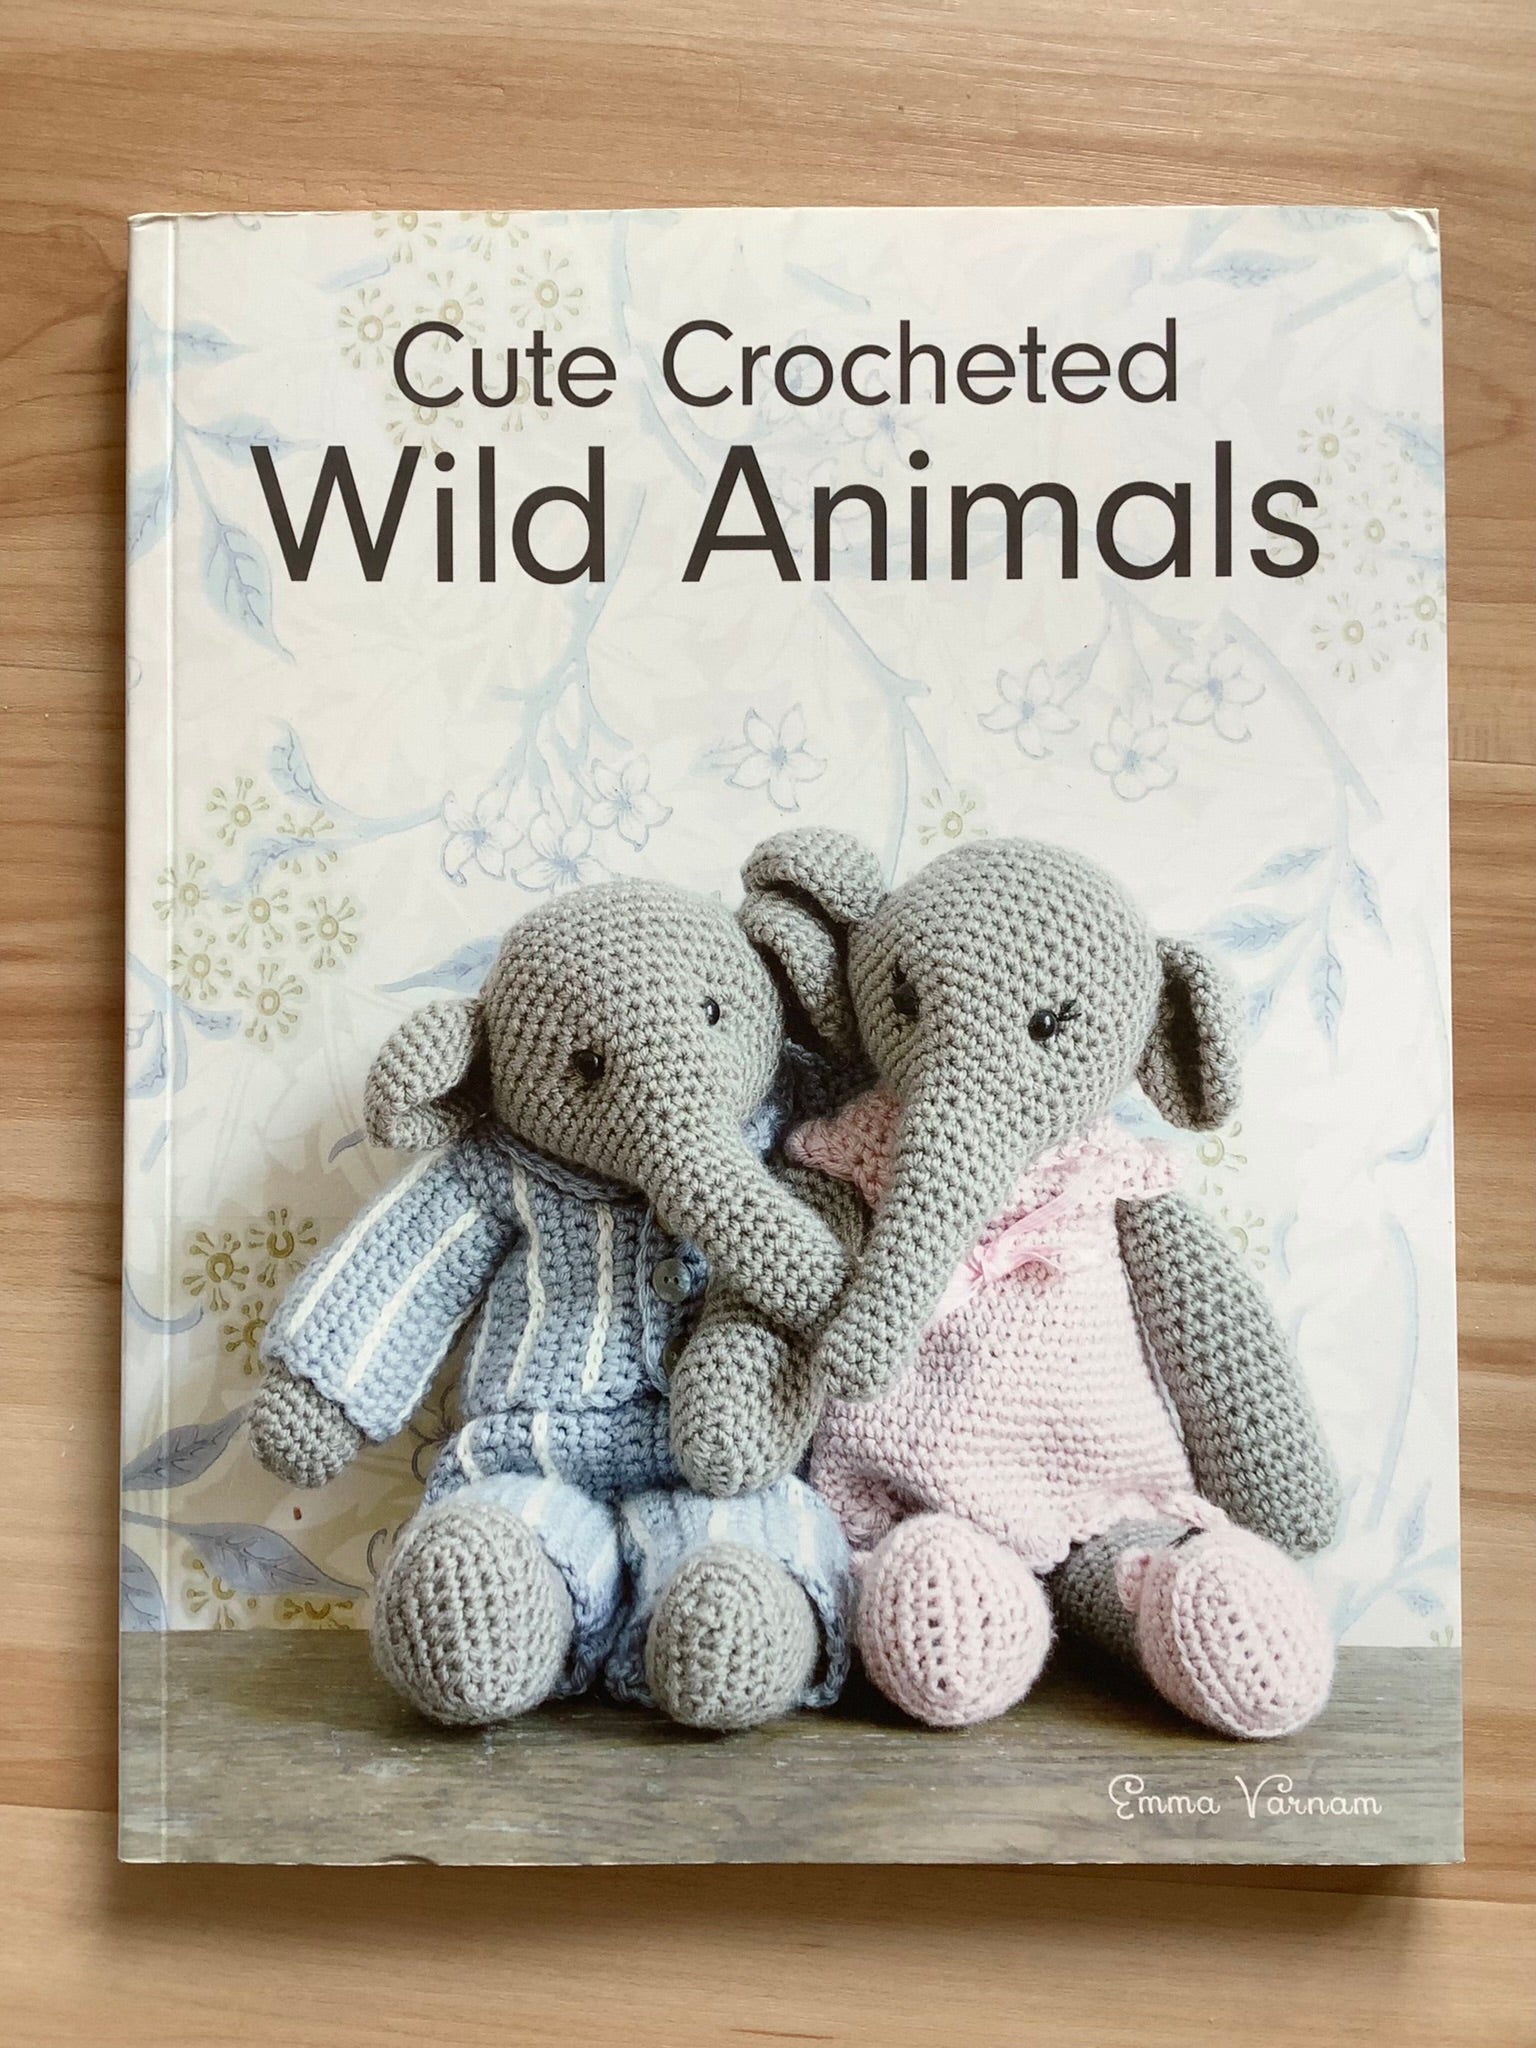 Cute Crocheted Wild Animals book by Emma Varnam